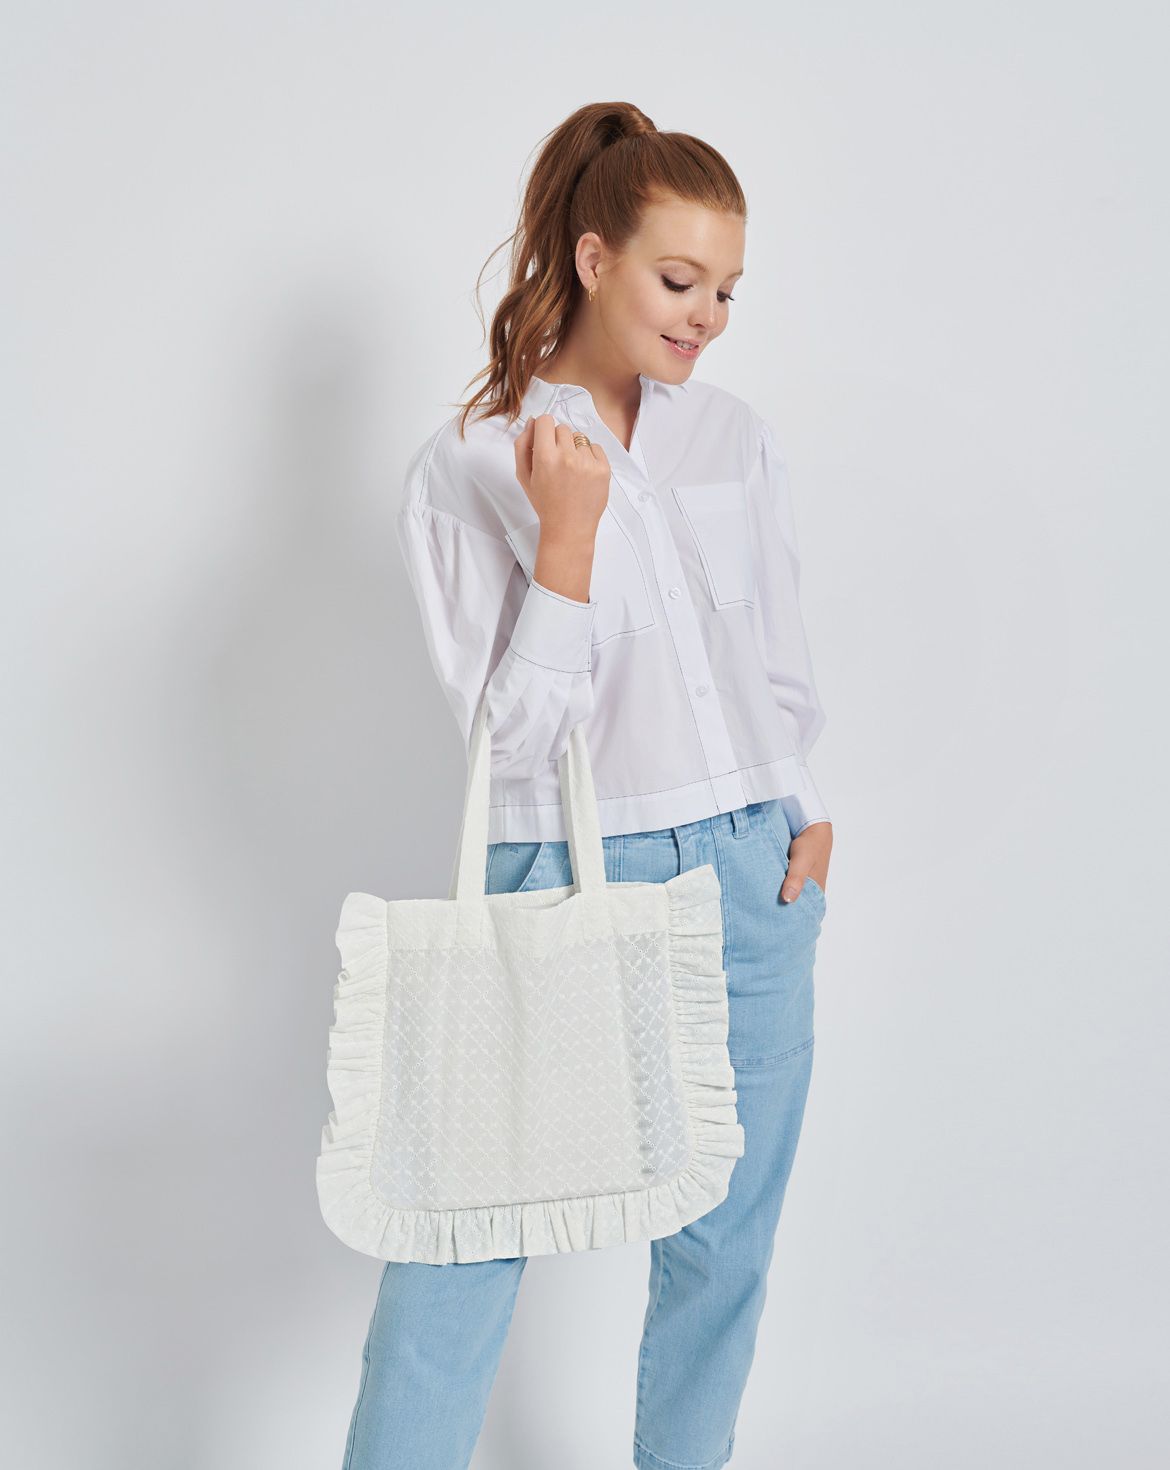 Cotton Bag n° 6 | Burda Easy n°3/2022